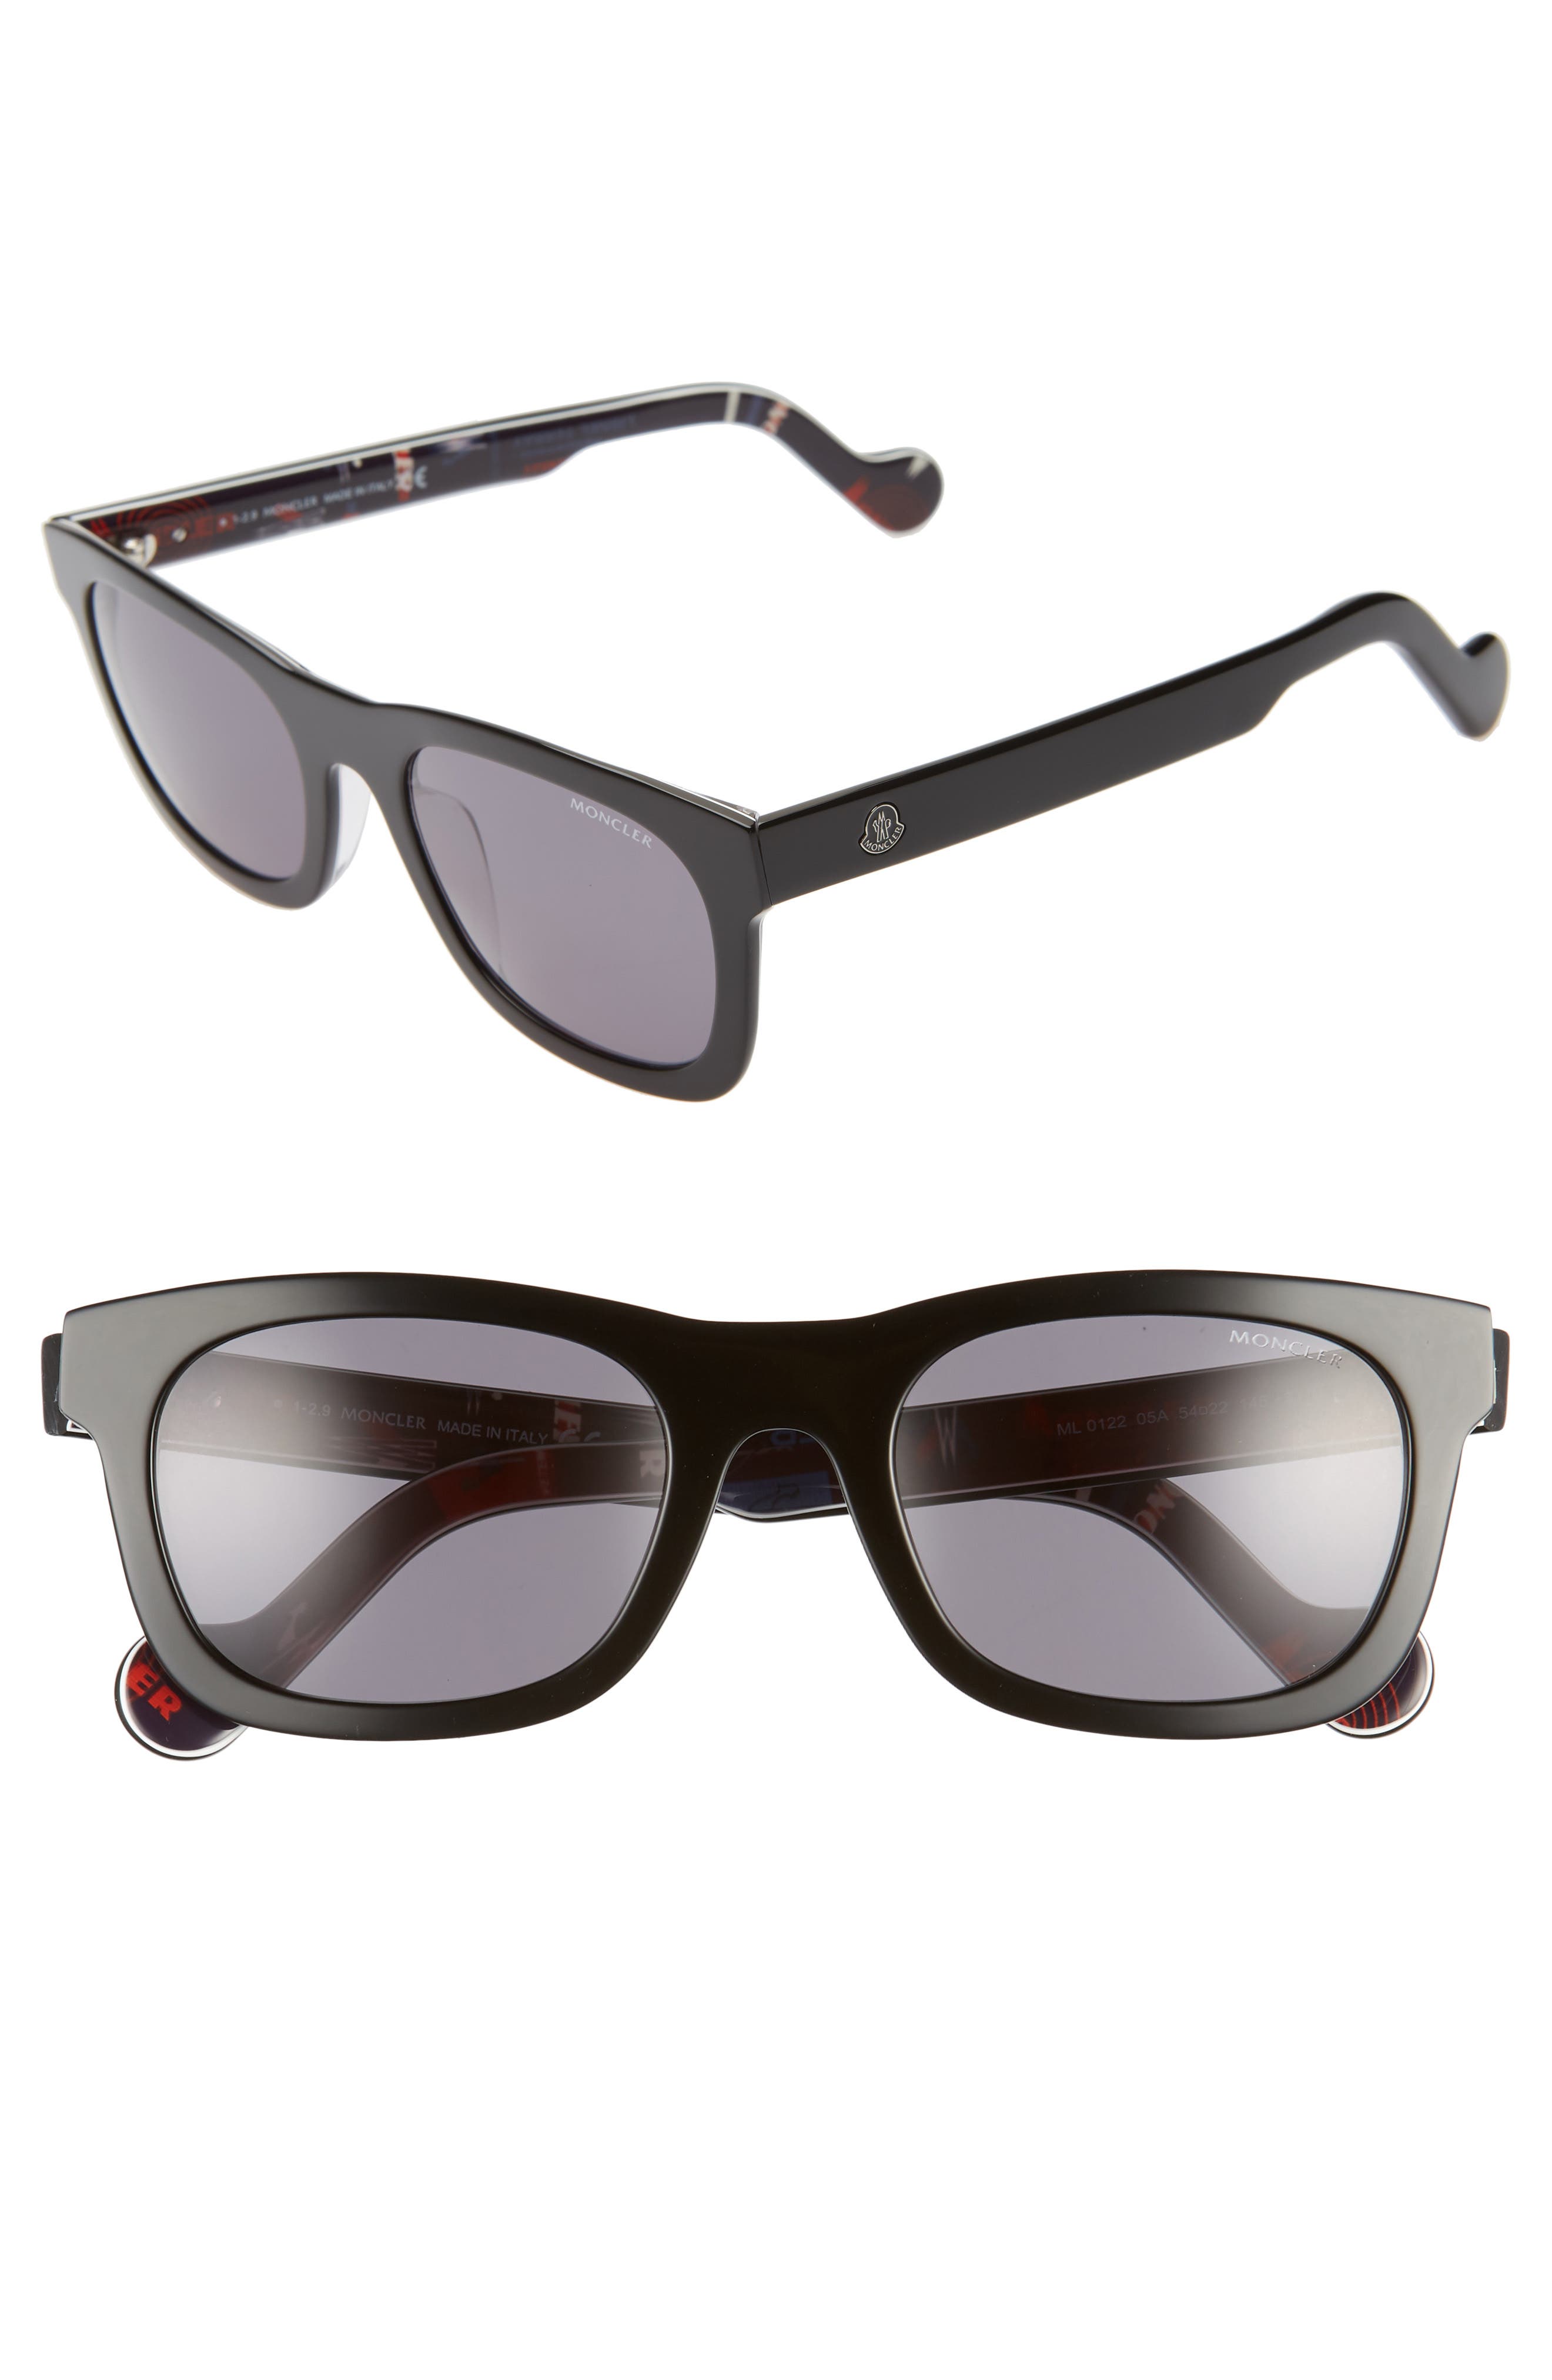 Moncler 54mm Rectangular Sunglasses in Shiny Black/Smoke at Nordstrom